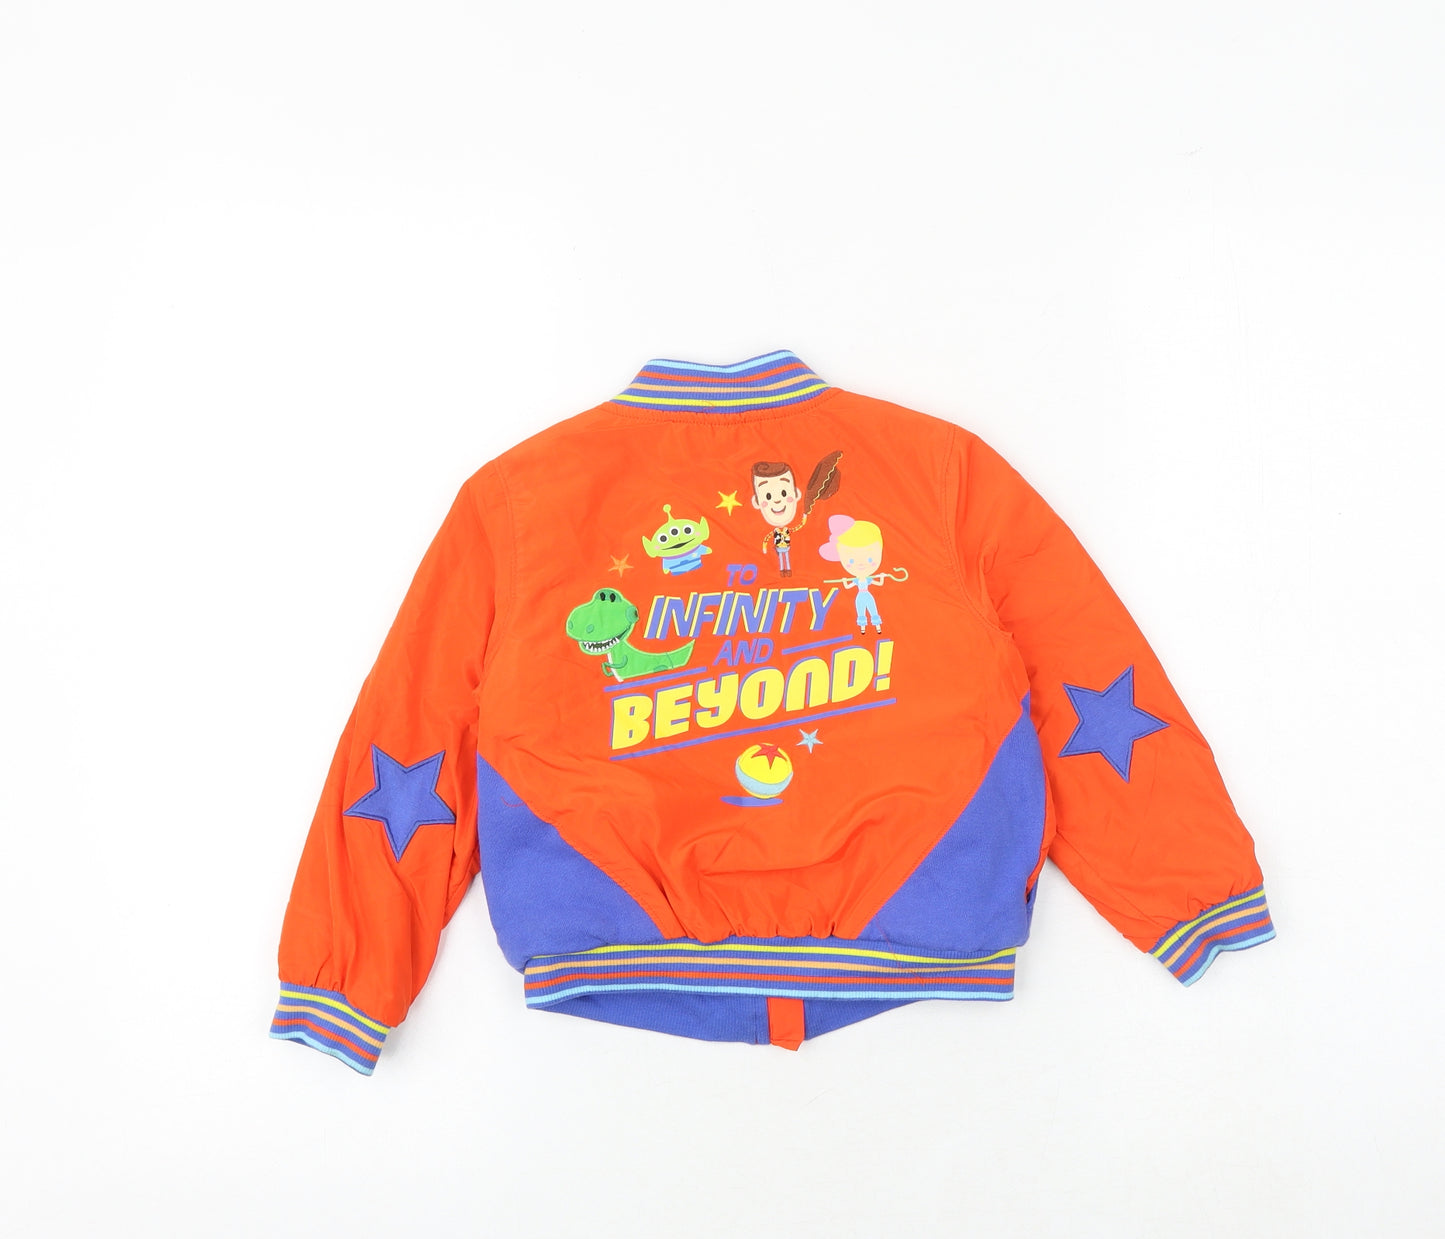 Disney Boys Multicoloured Colourblock Bomber Jacket Jacket Size 3 Years Zip